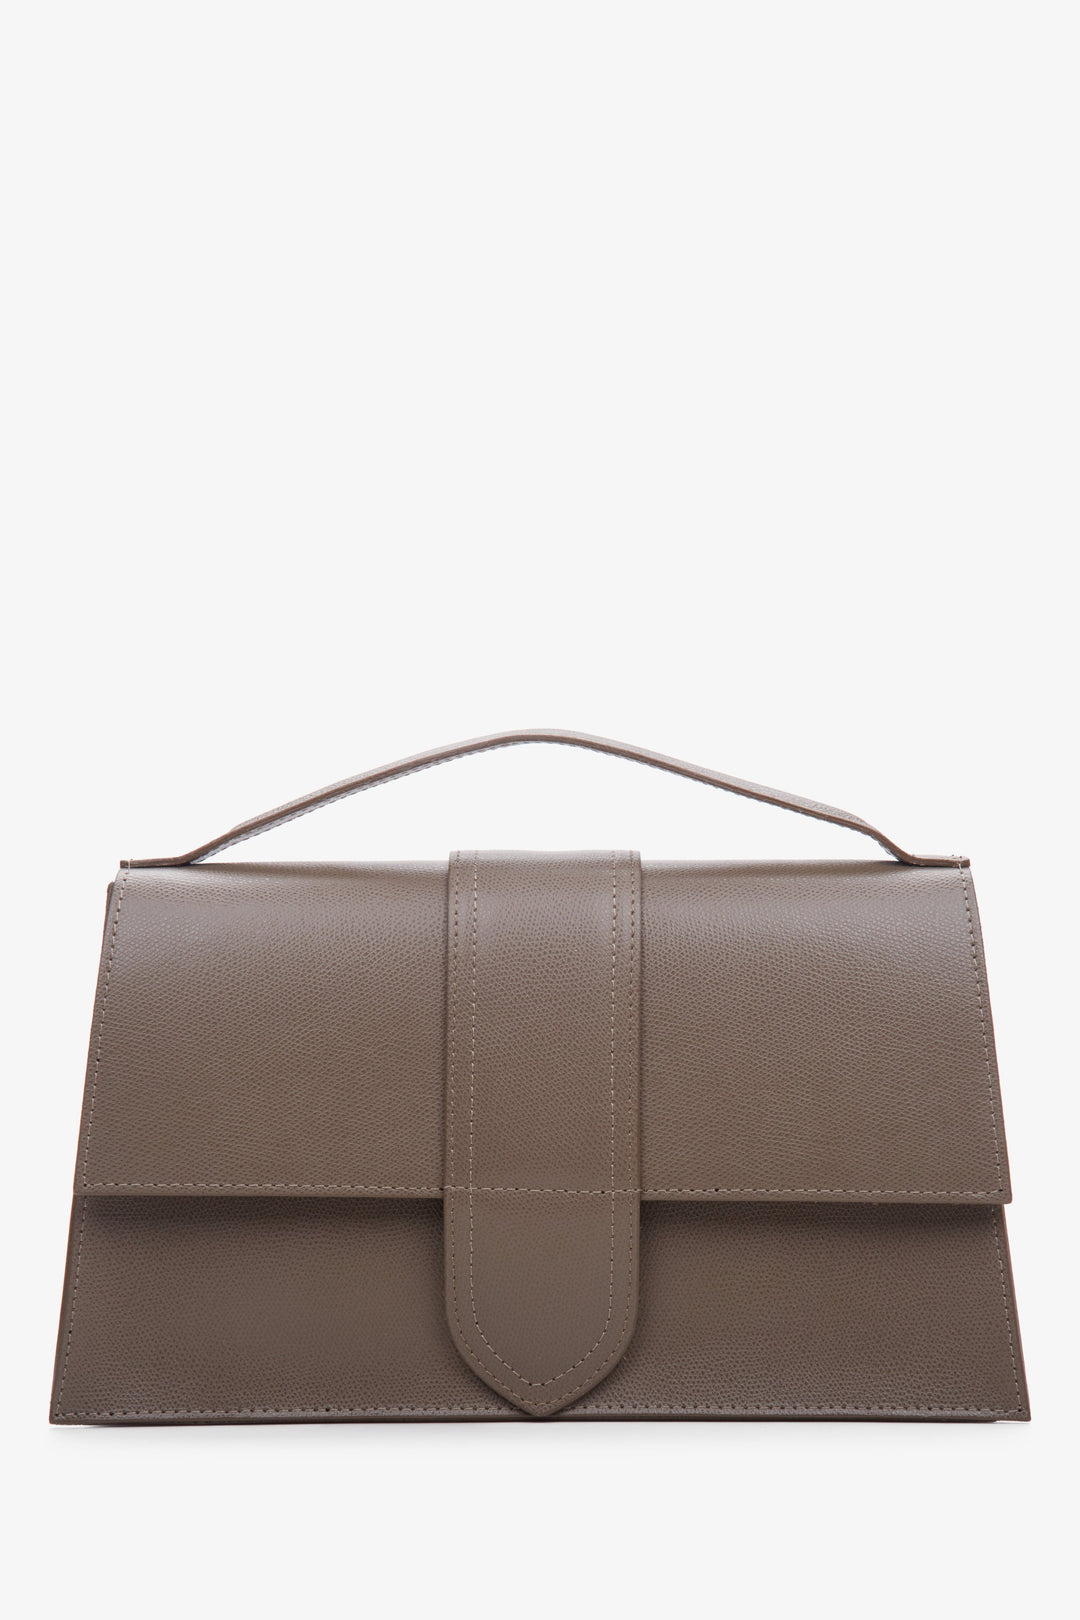 Women's Small Brown Flap Handbag made of Italian Genuine Leather Estro ER00114075.